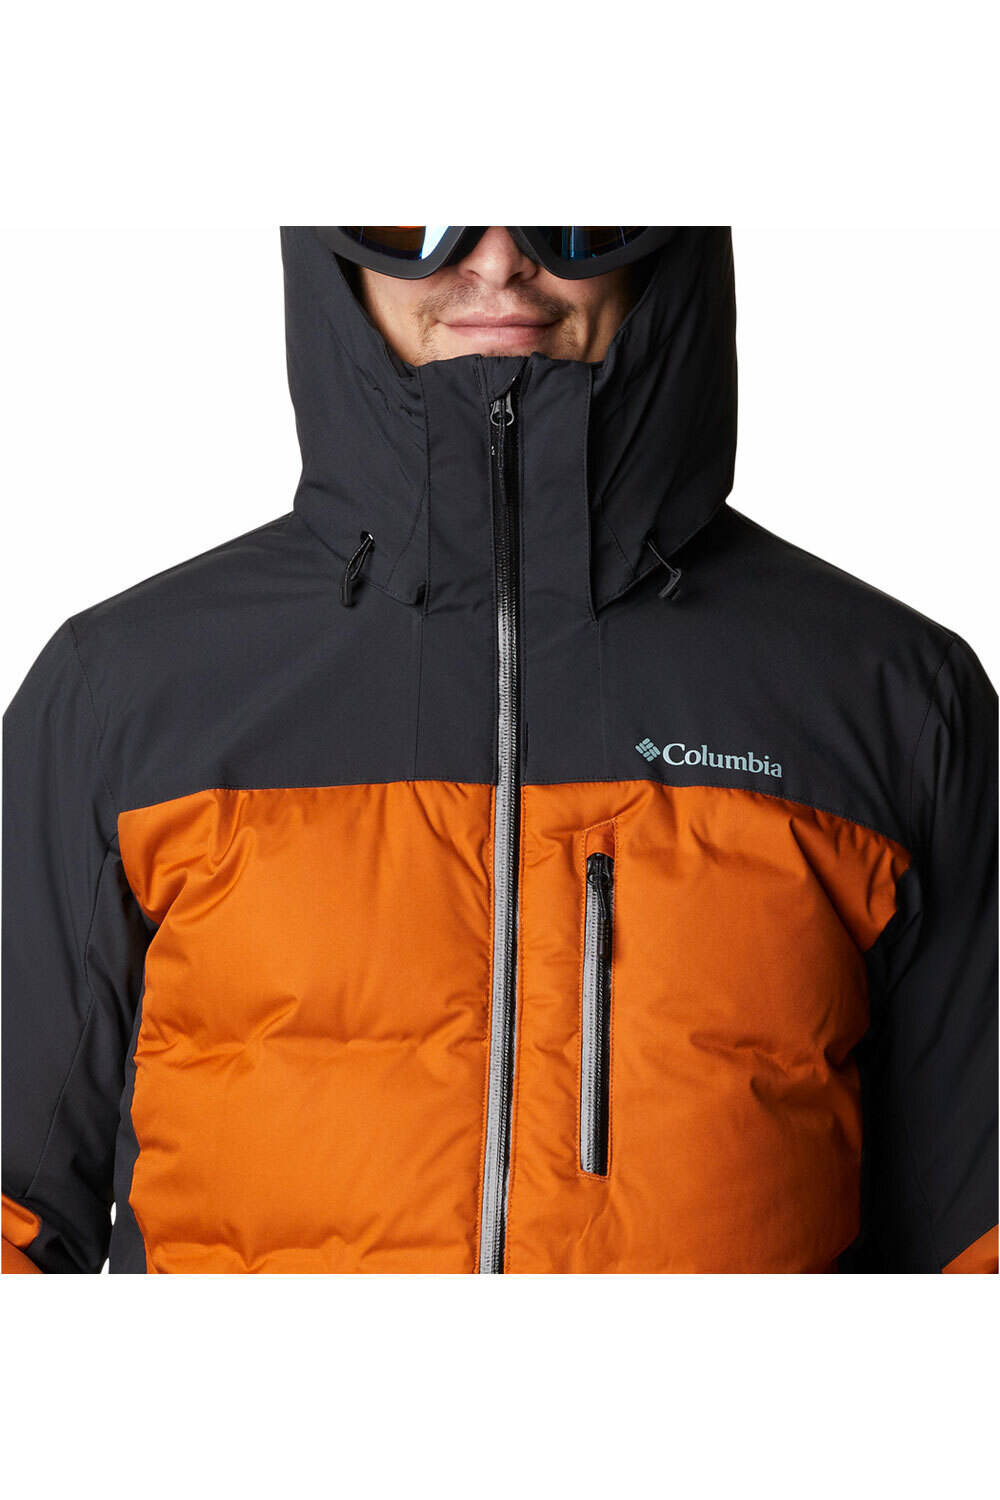 Columbia chaqueta esquí hombre WILD CARD II DOWN JACKET 05